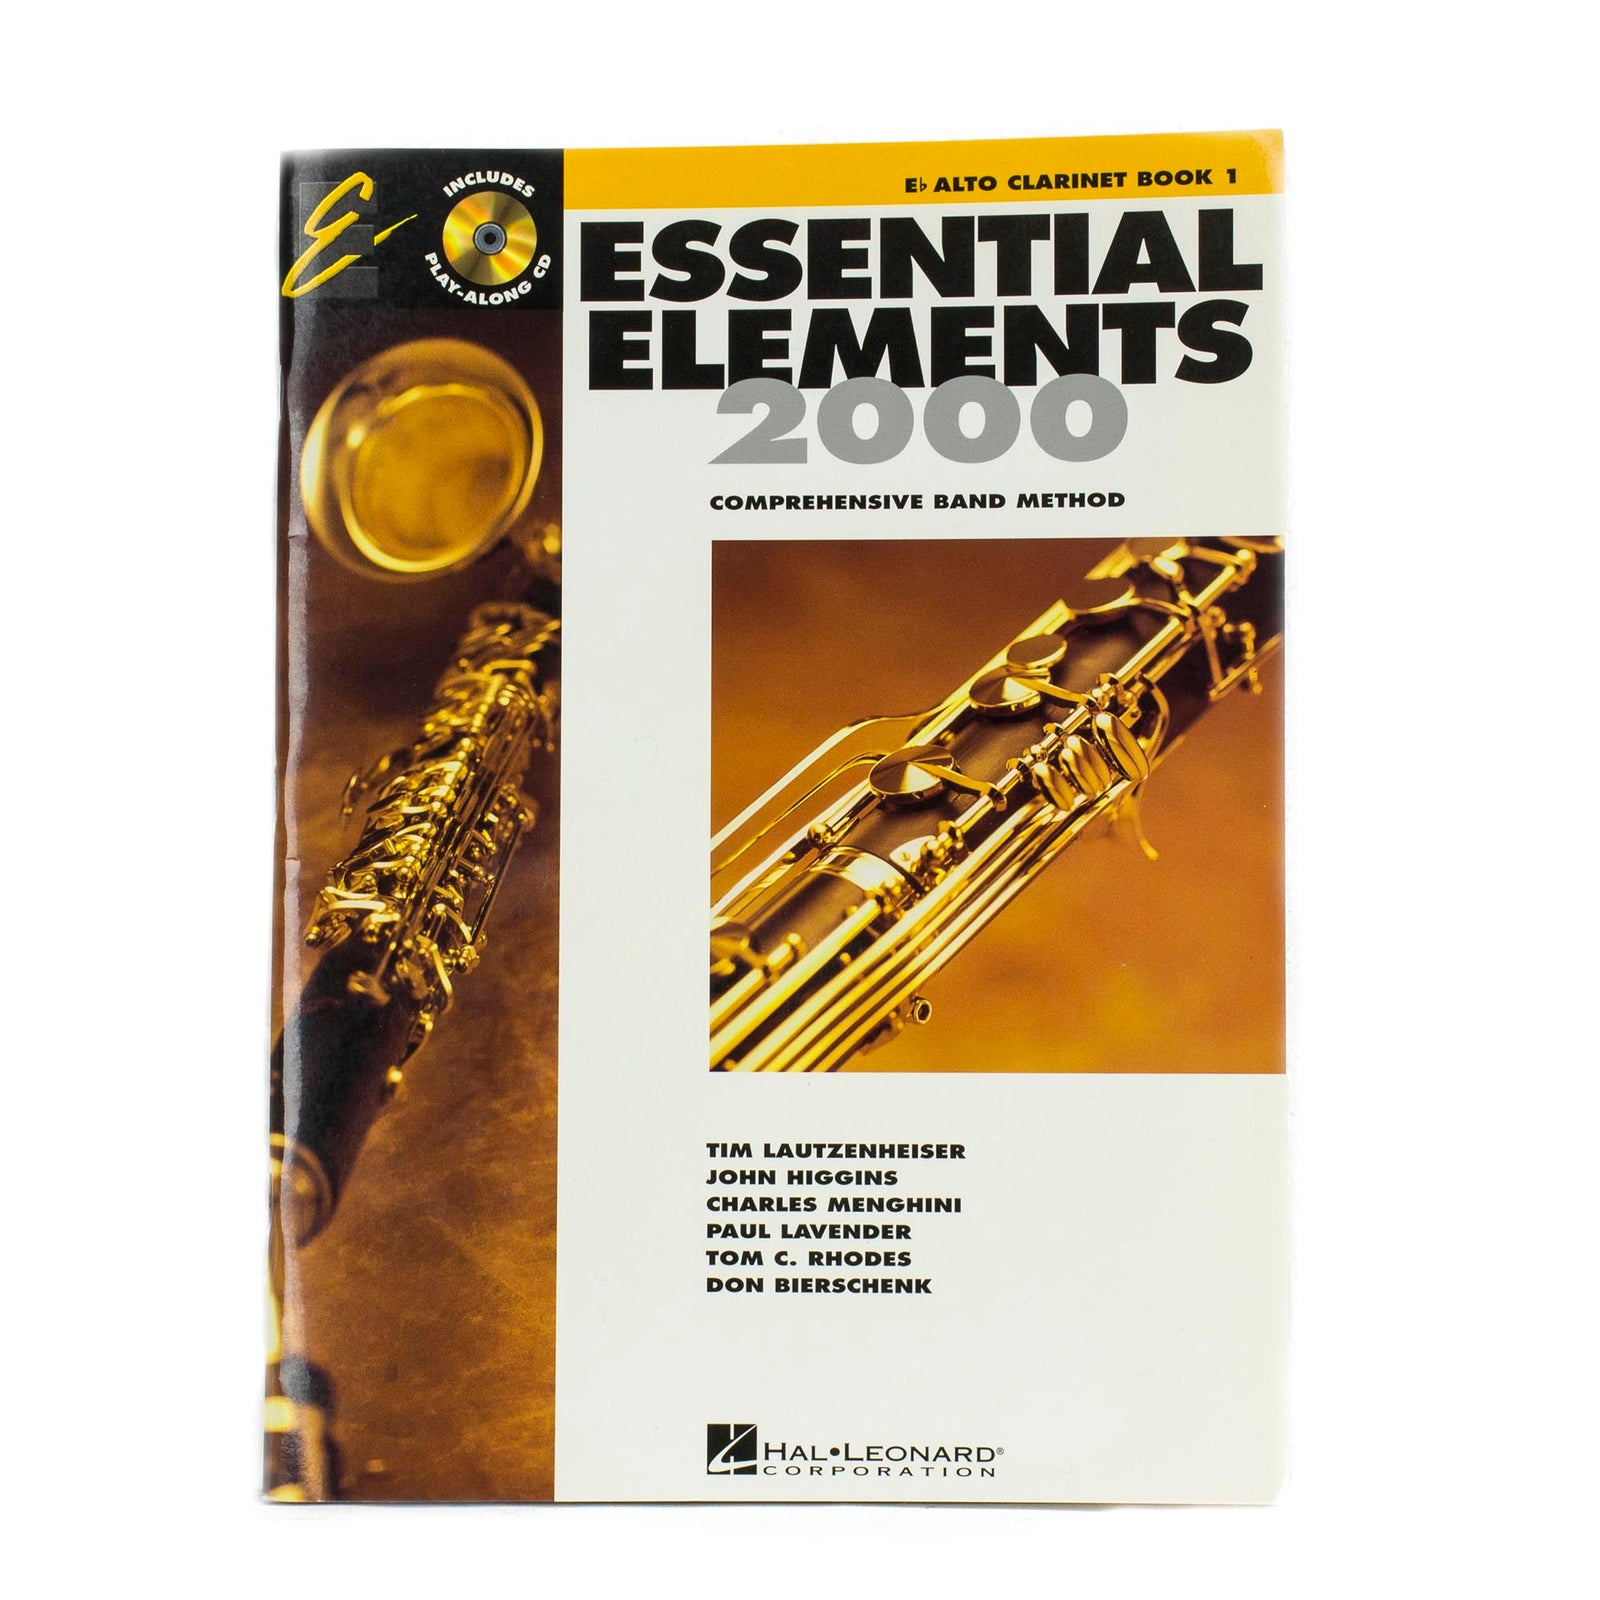 Essential Elements - EB Alto Clarinet - Book 1